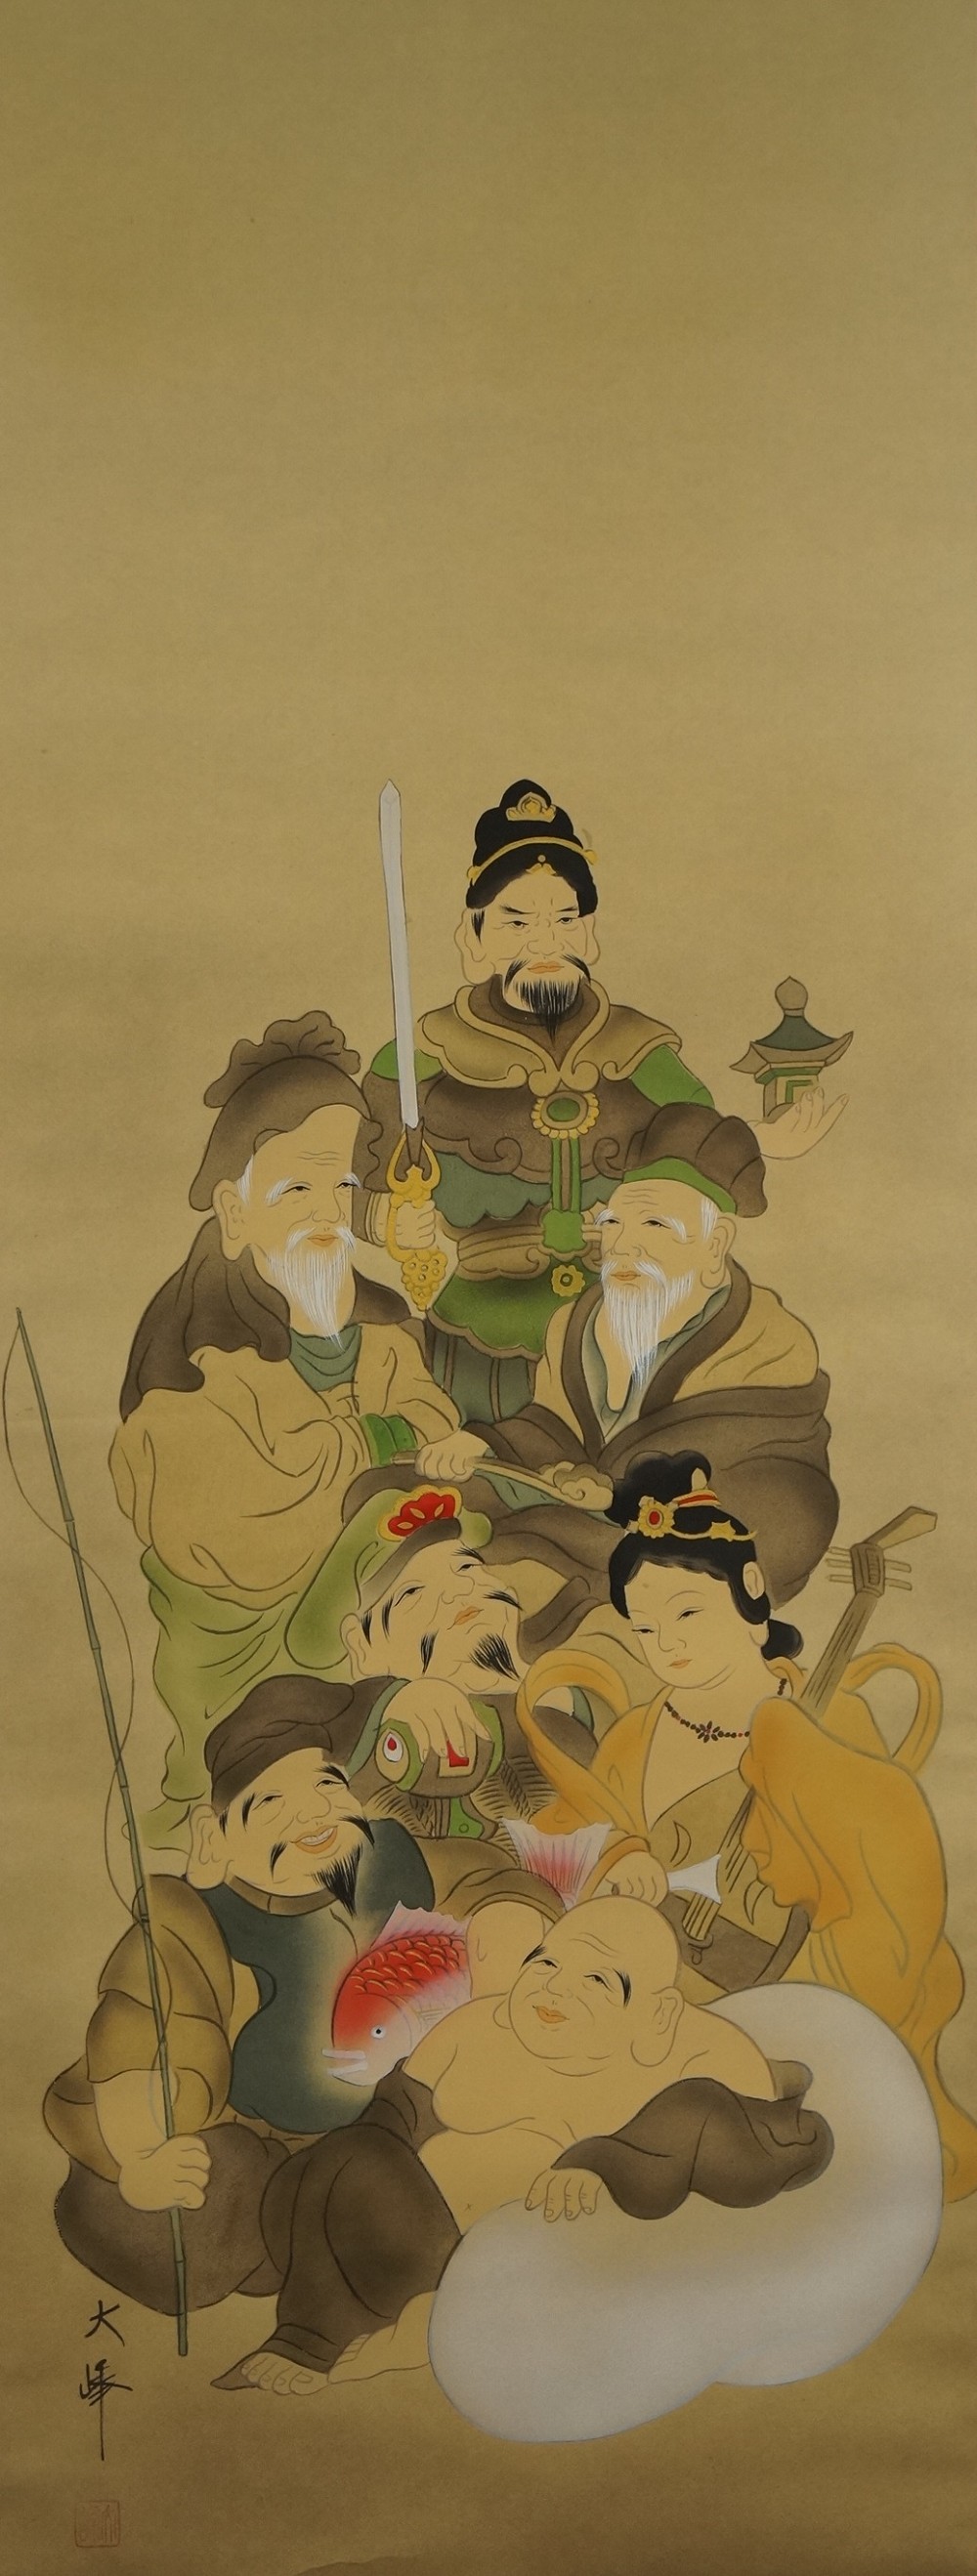 Die 7 Glücksgötter - Japanisches Rollbild (Kakejiku, Kakemono)